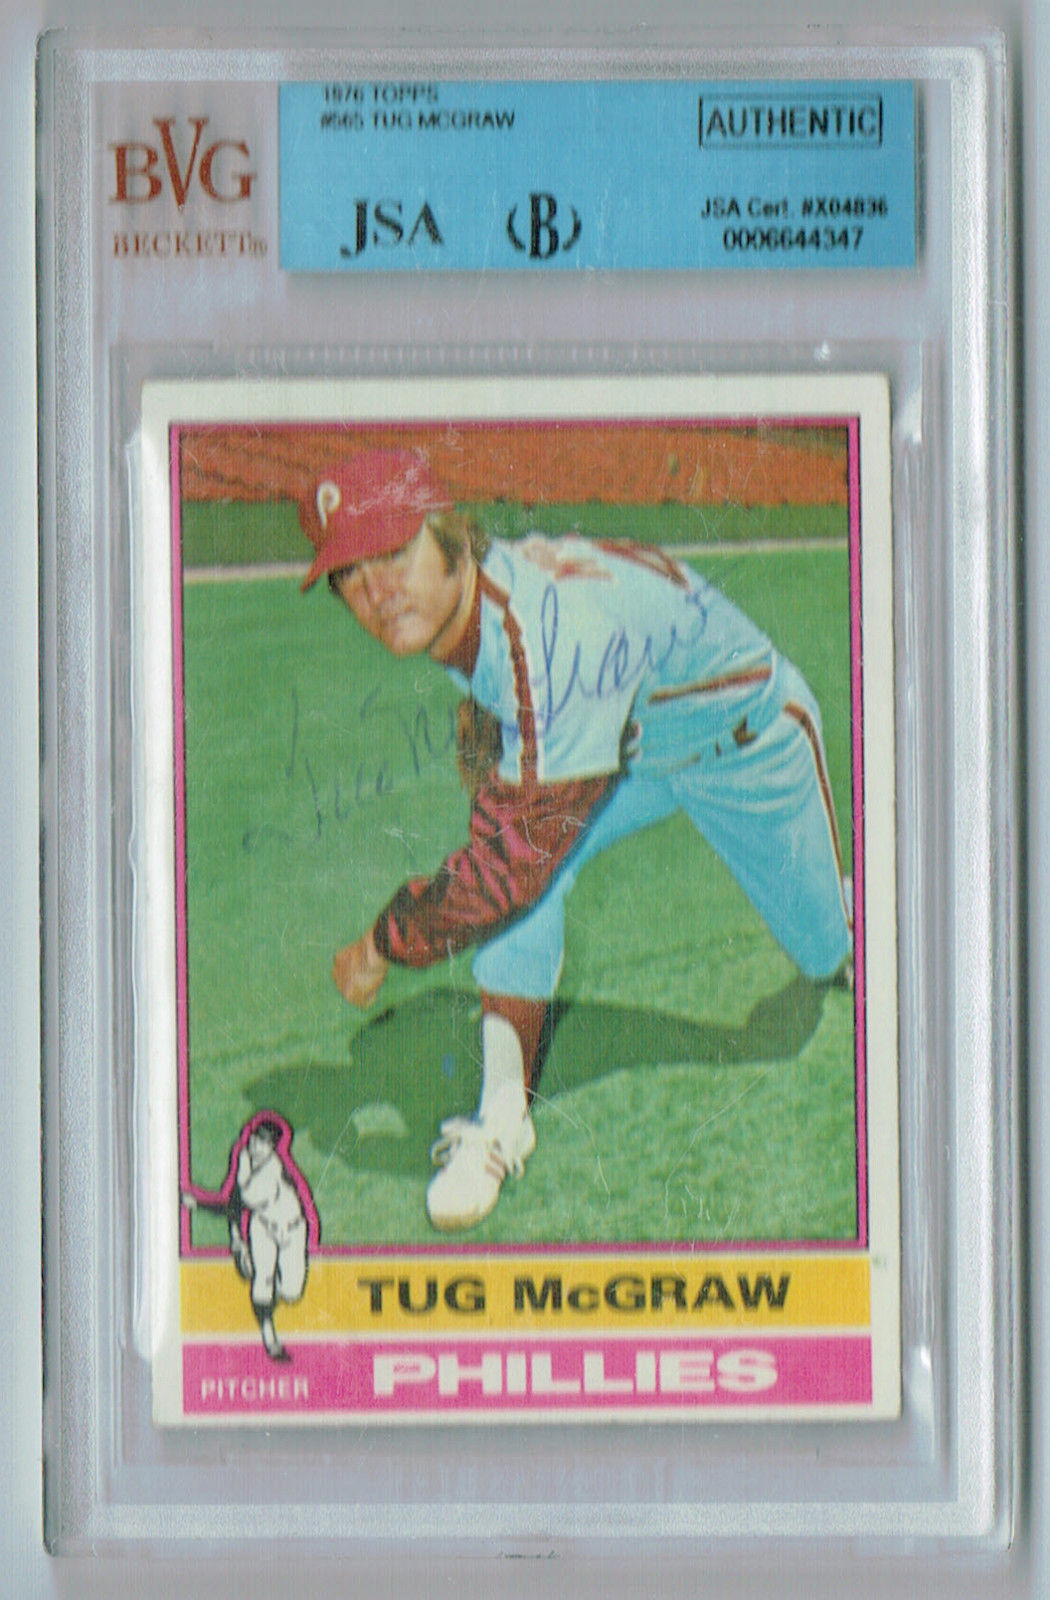 1976 Topps Tug McGraw Signed Baseball Card #565 auto  BGS JSA coa